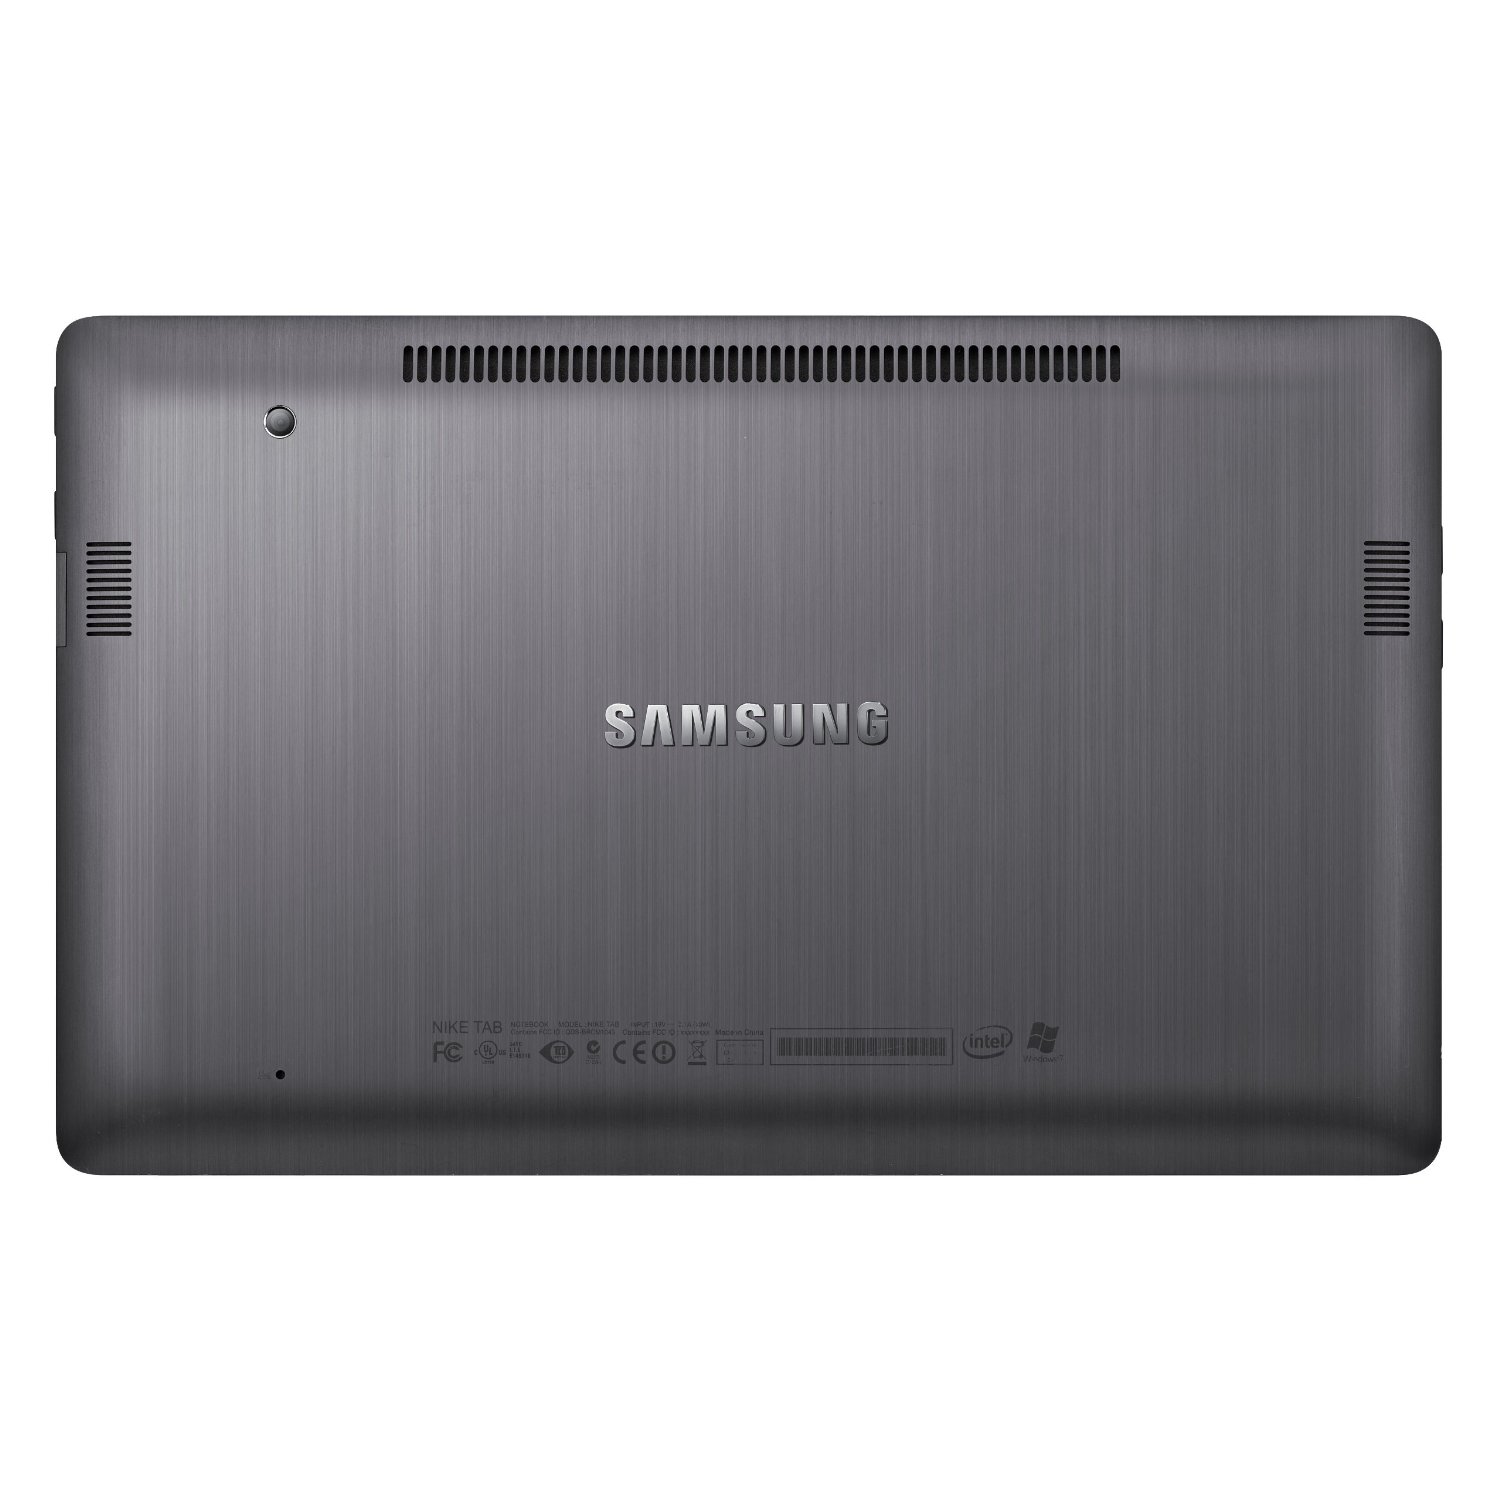 Samsung 700T1A-A03US